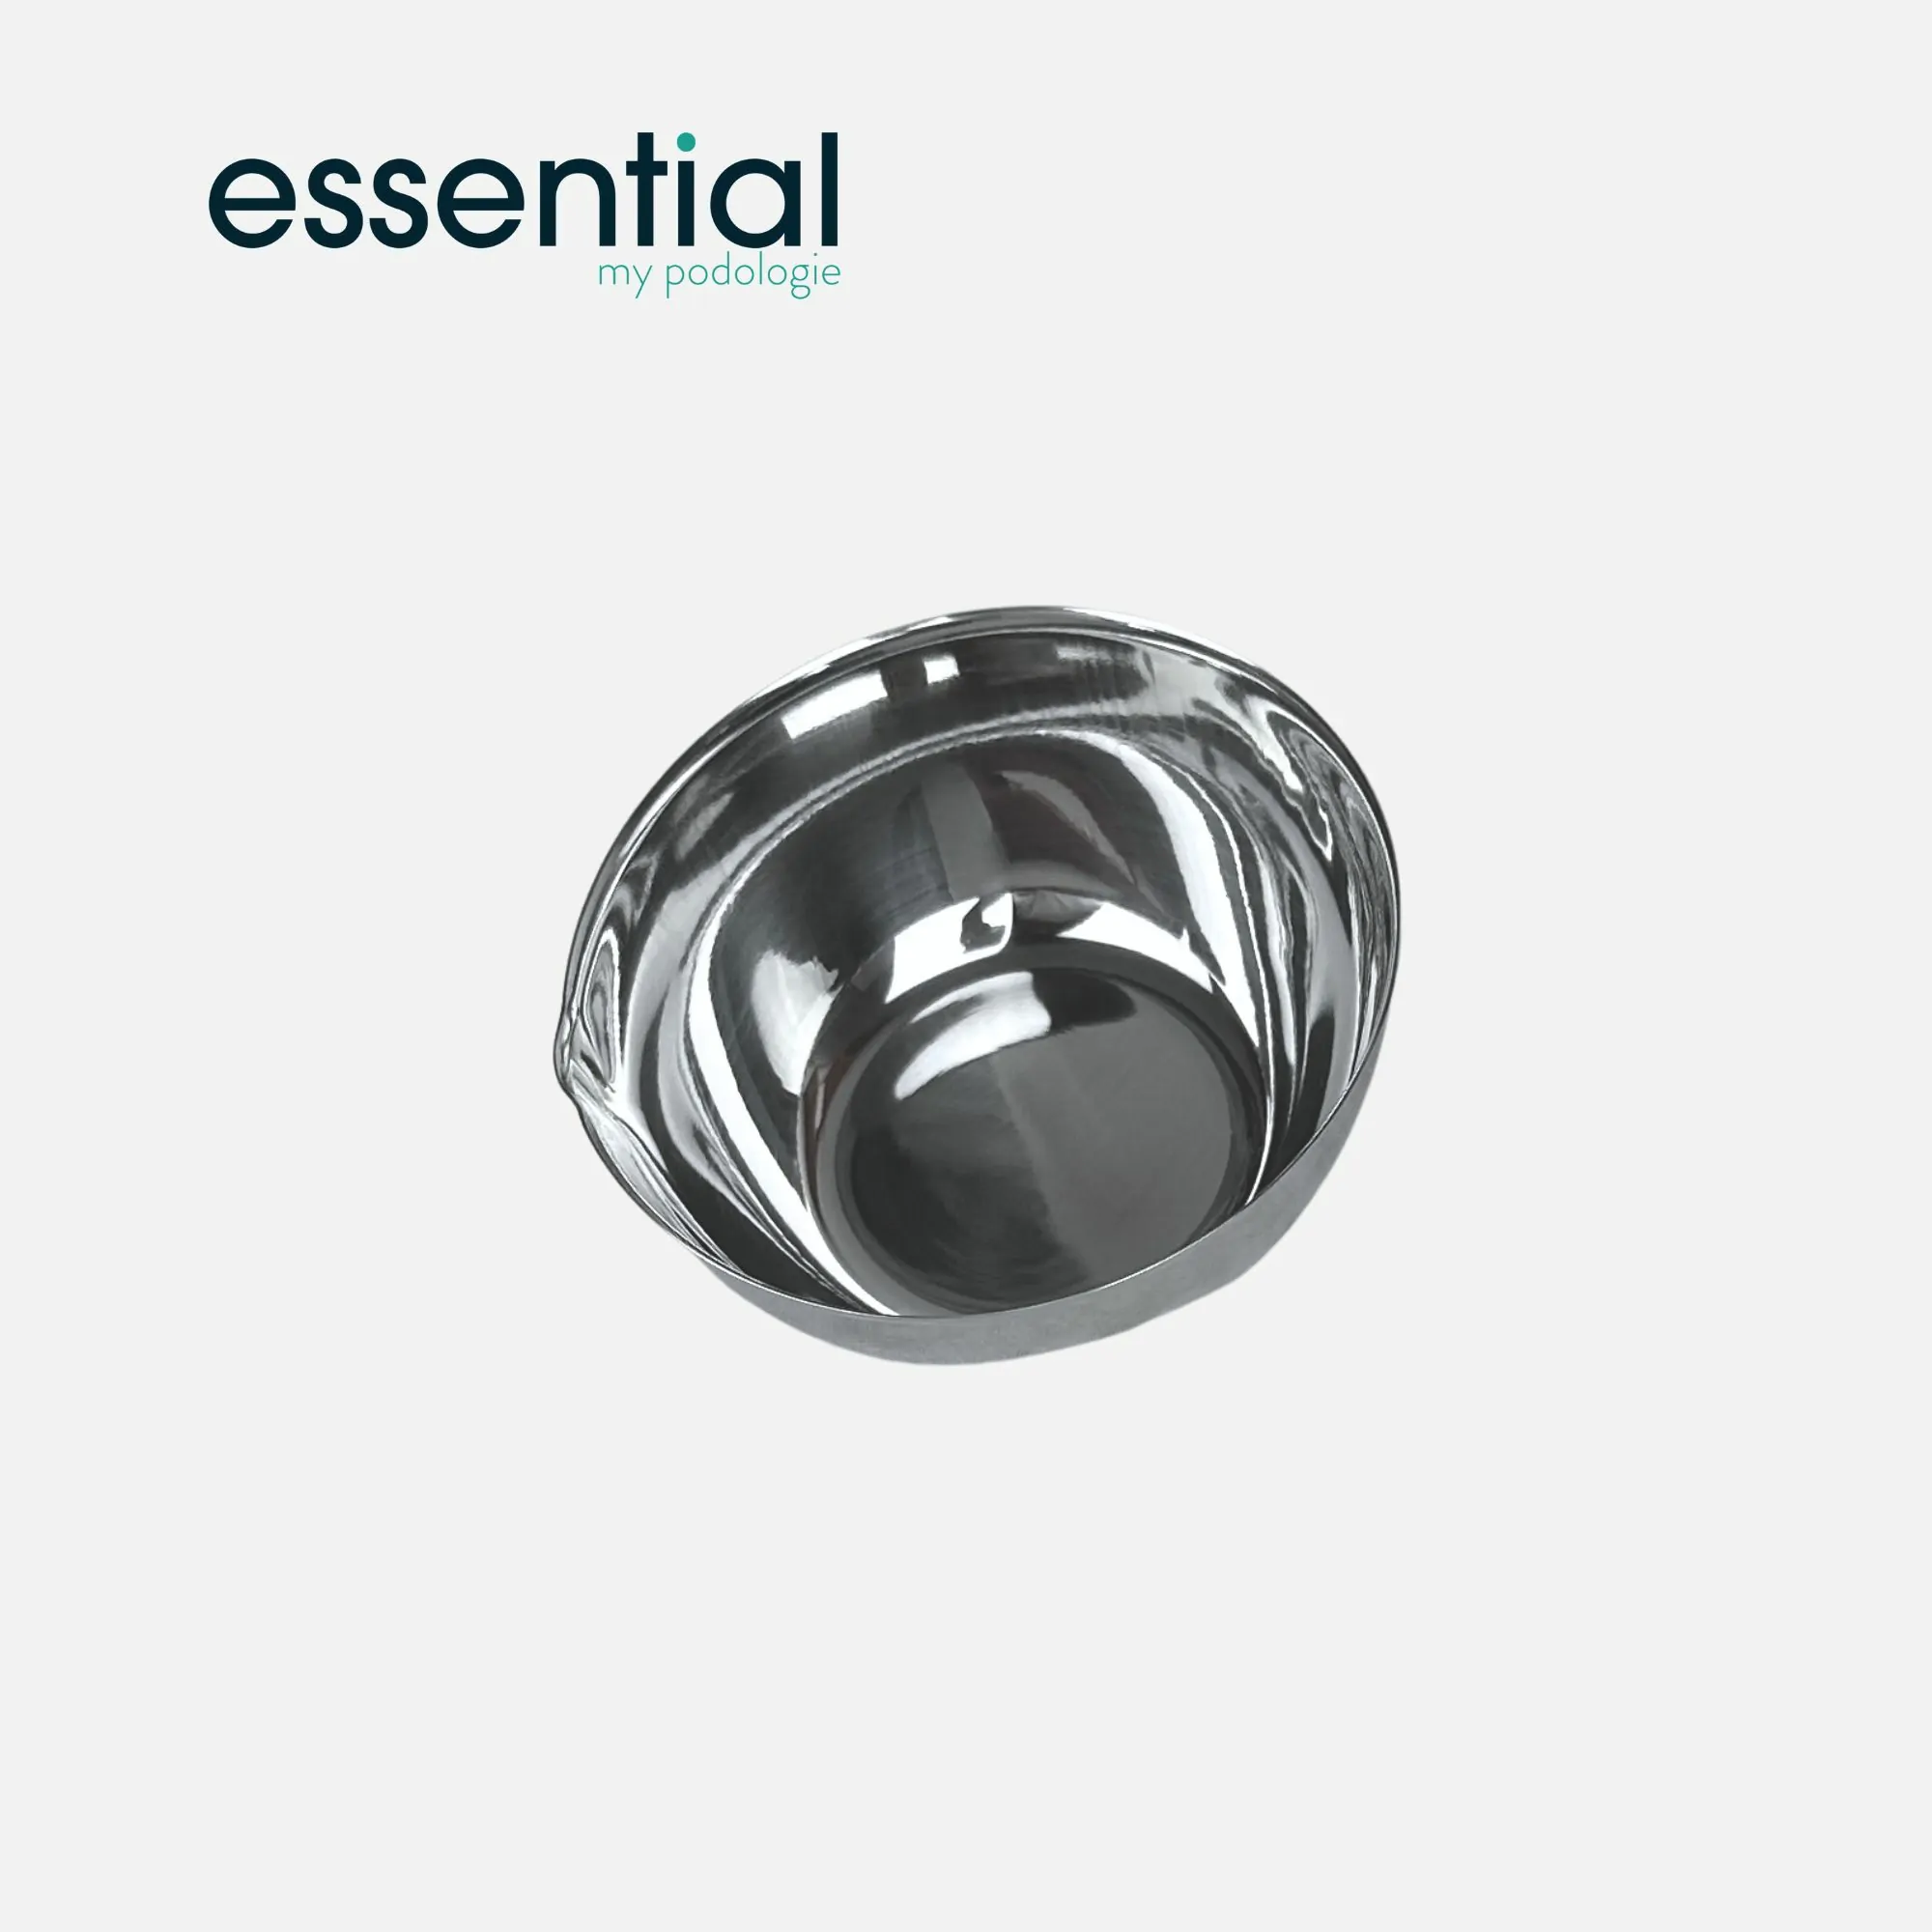 Cupule avec bec et fond plat - Inox - 3 dimensions - Essential by My Podologie